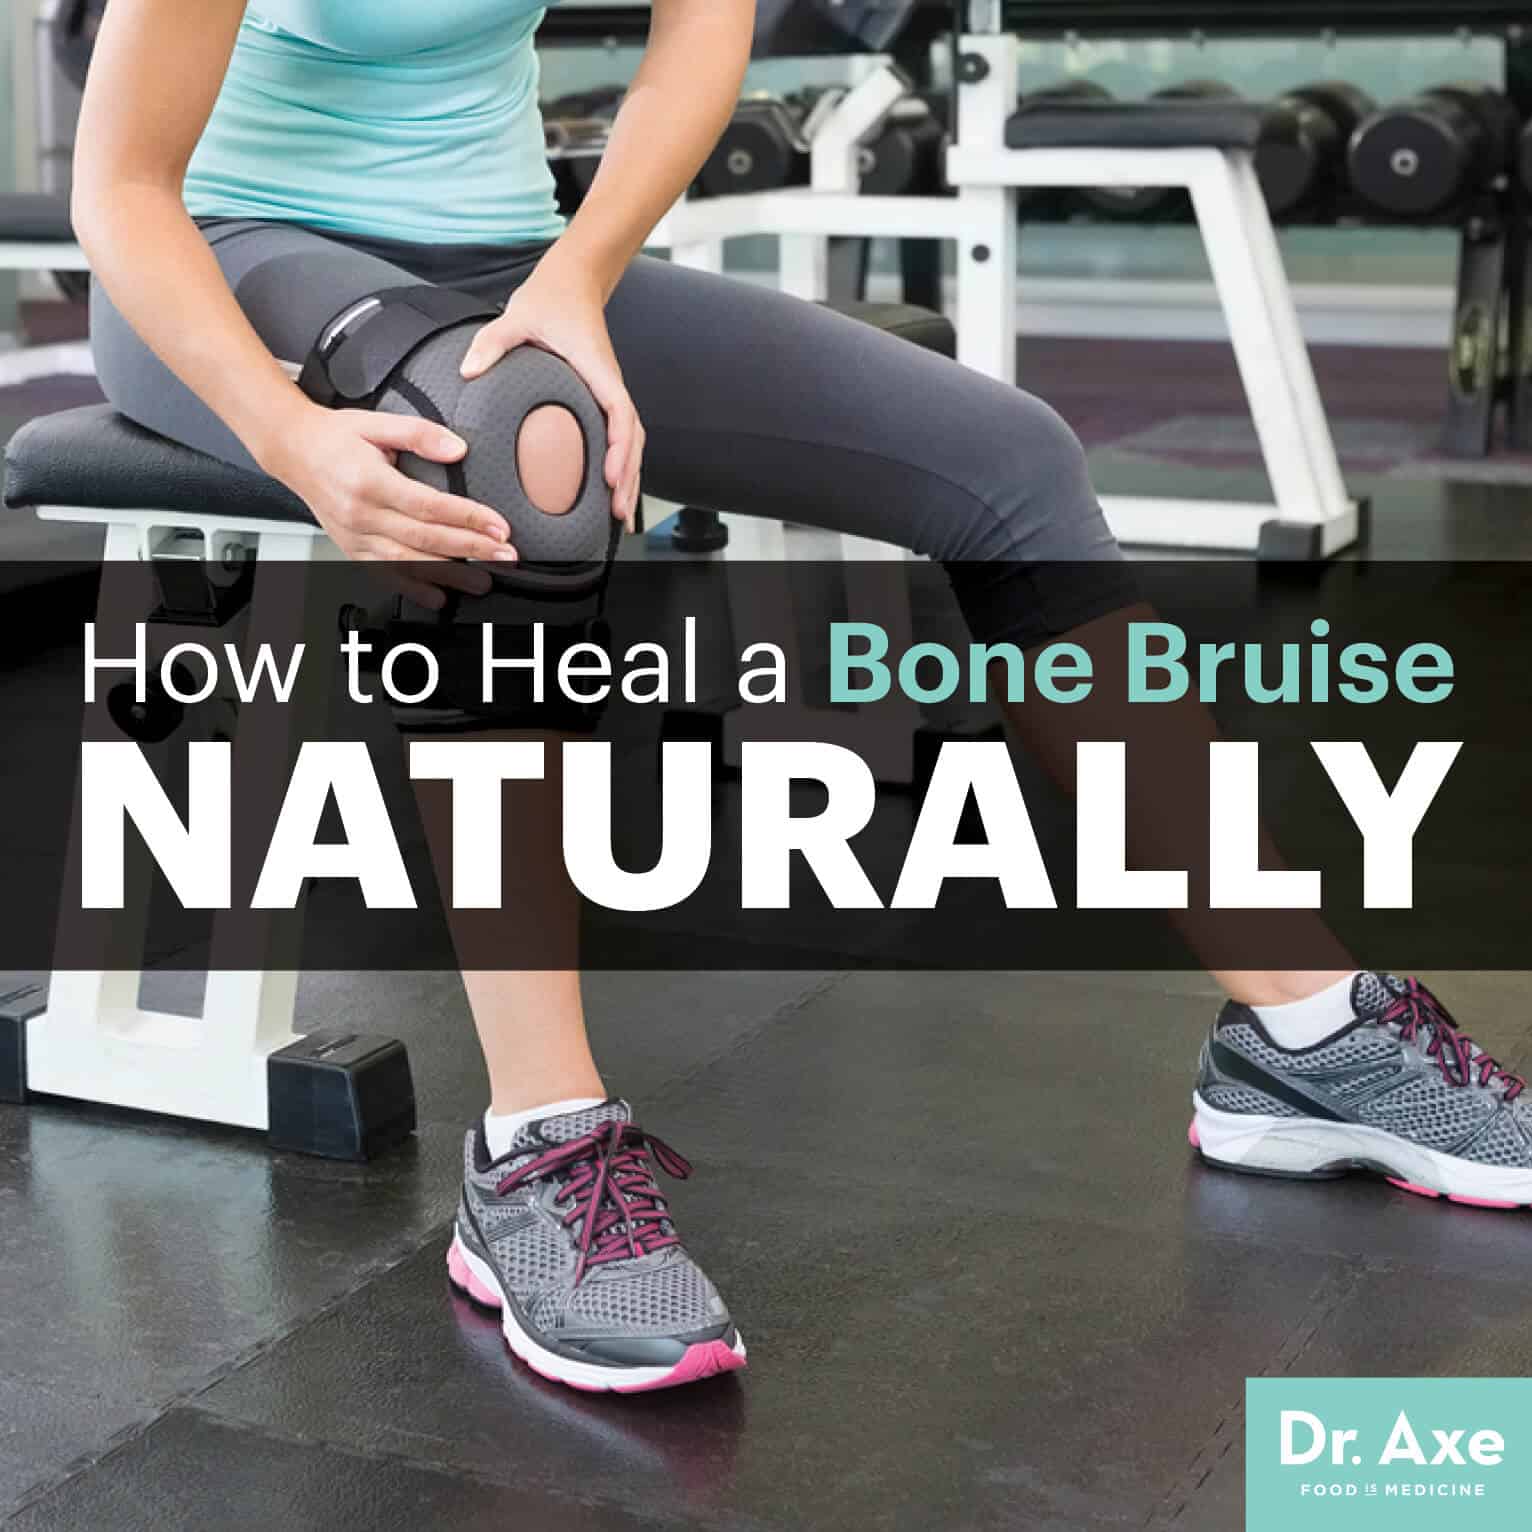 Bone bruise - Dr. Axe